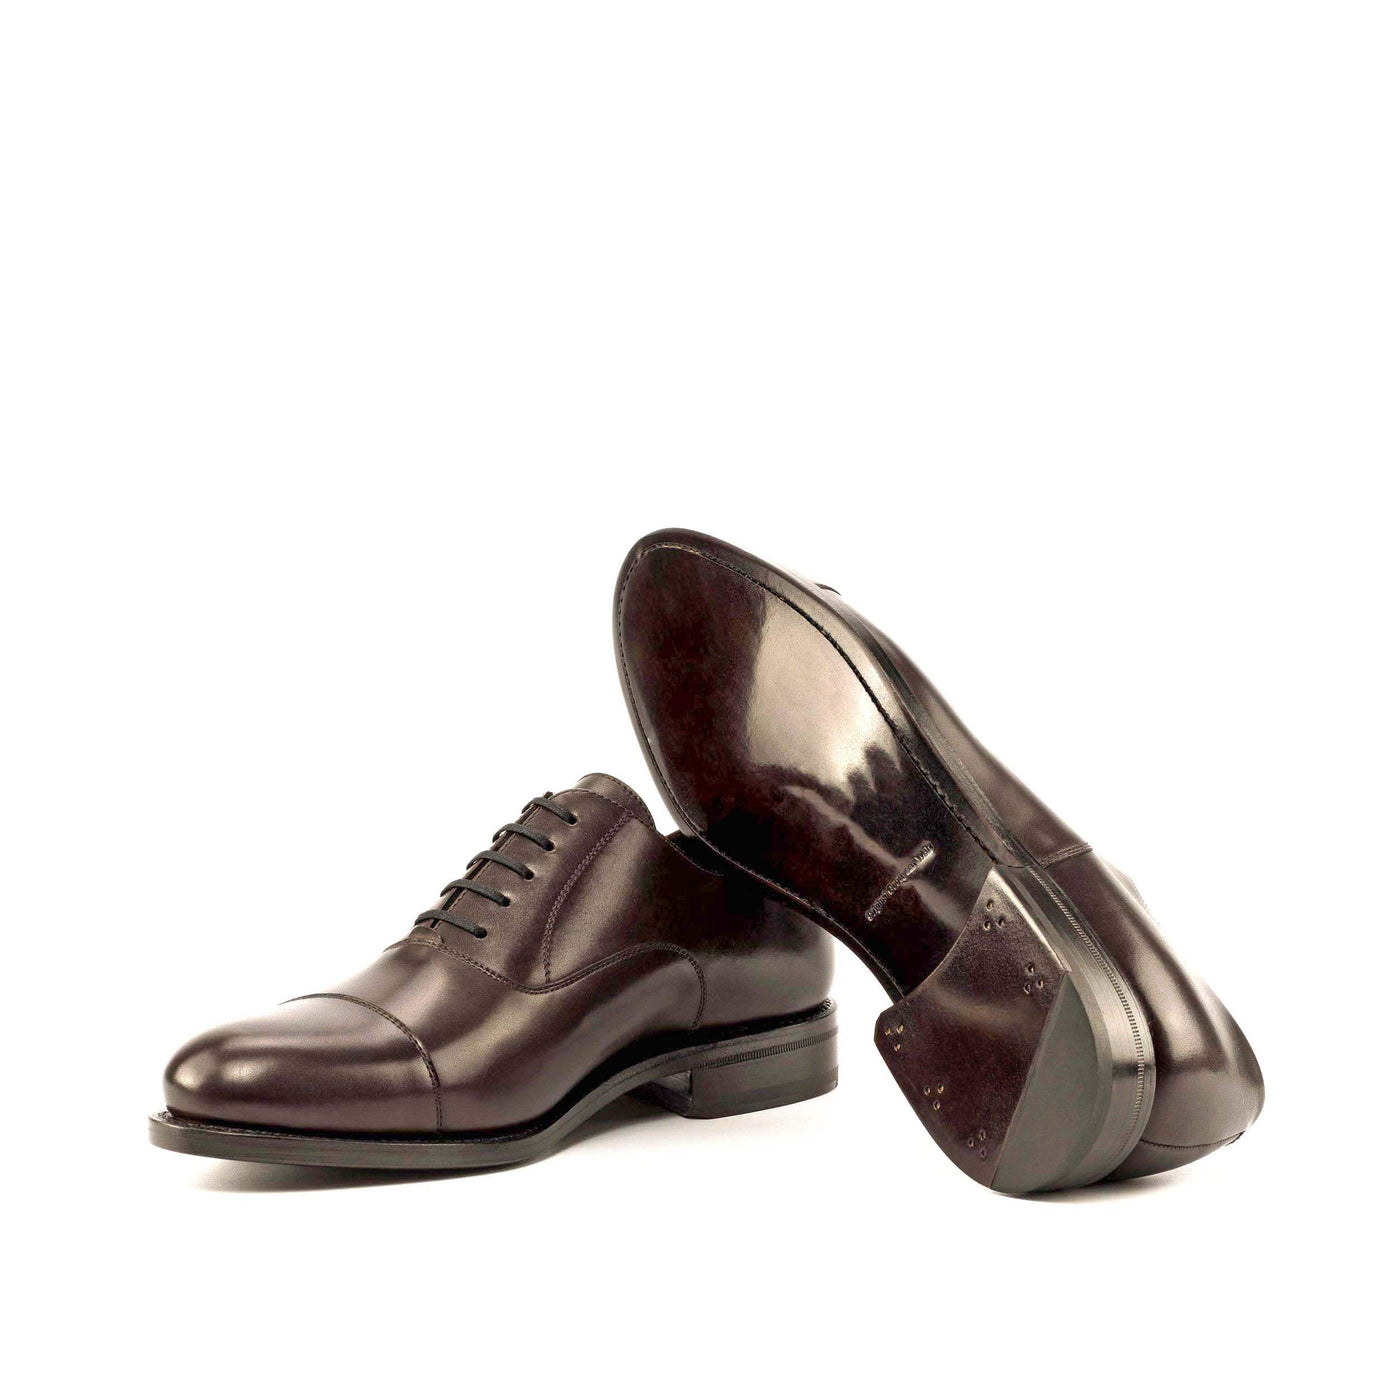 Men's Oxford Shoes Leather Goodyear Welt Dark Brown 5016 2- MERRIMIUM